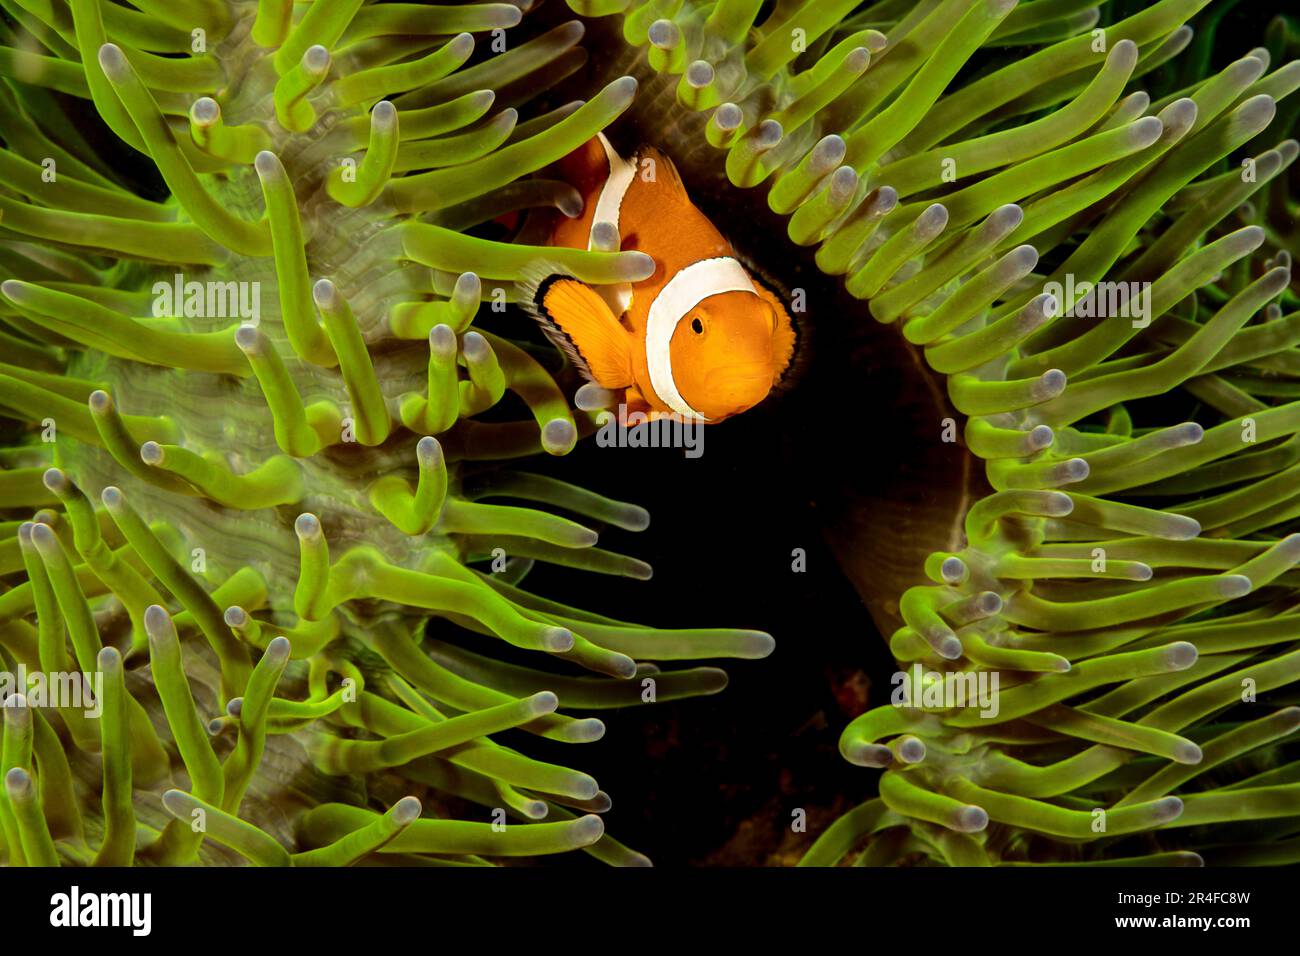 Clown anemonefish, Amphiprion percola, in anemone, Heteractis magnifica, Filippine. Foto Stock